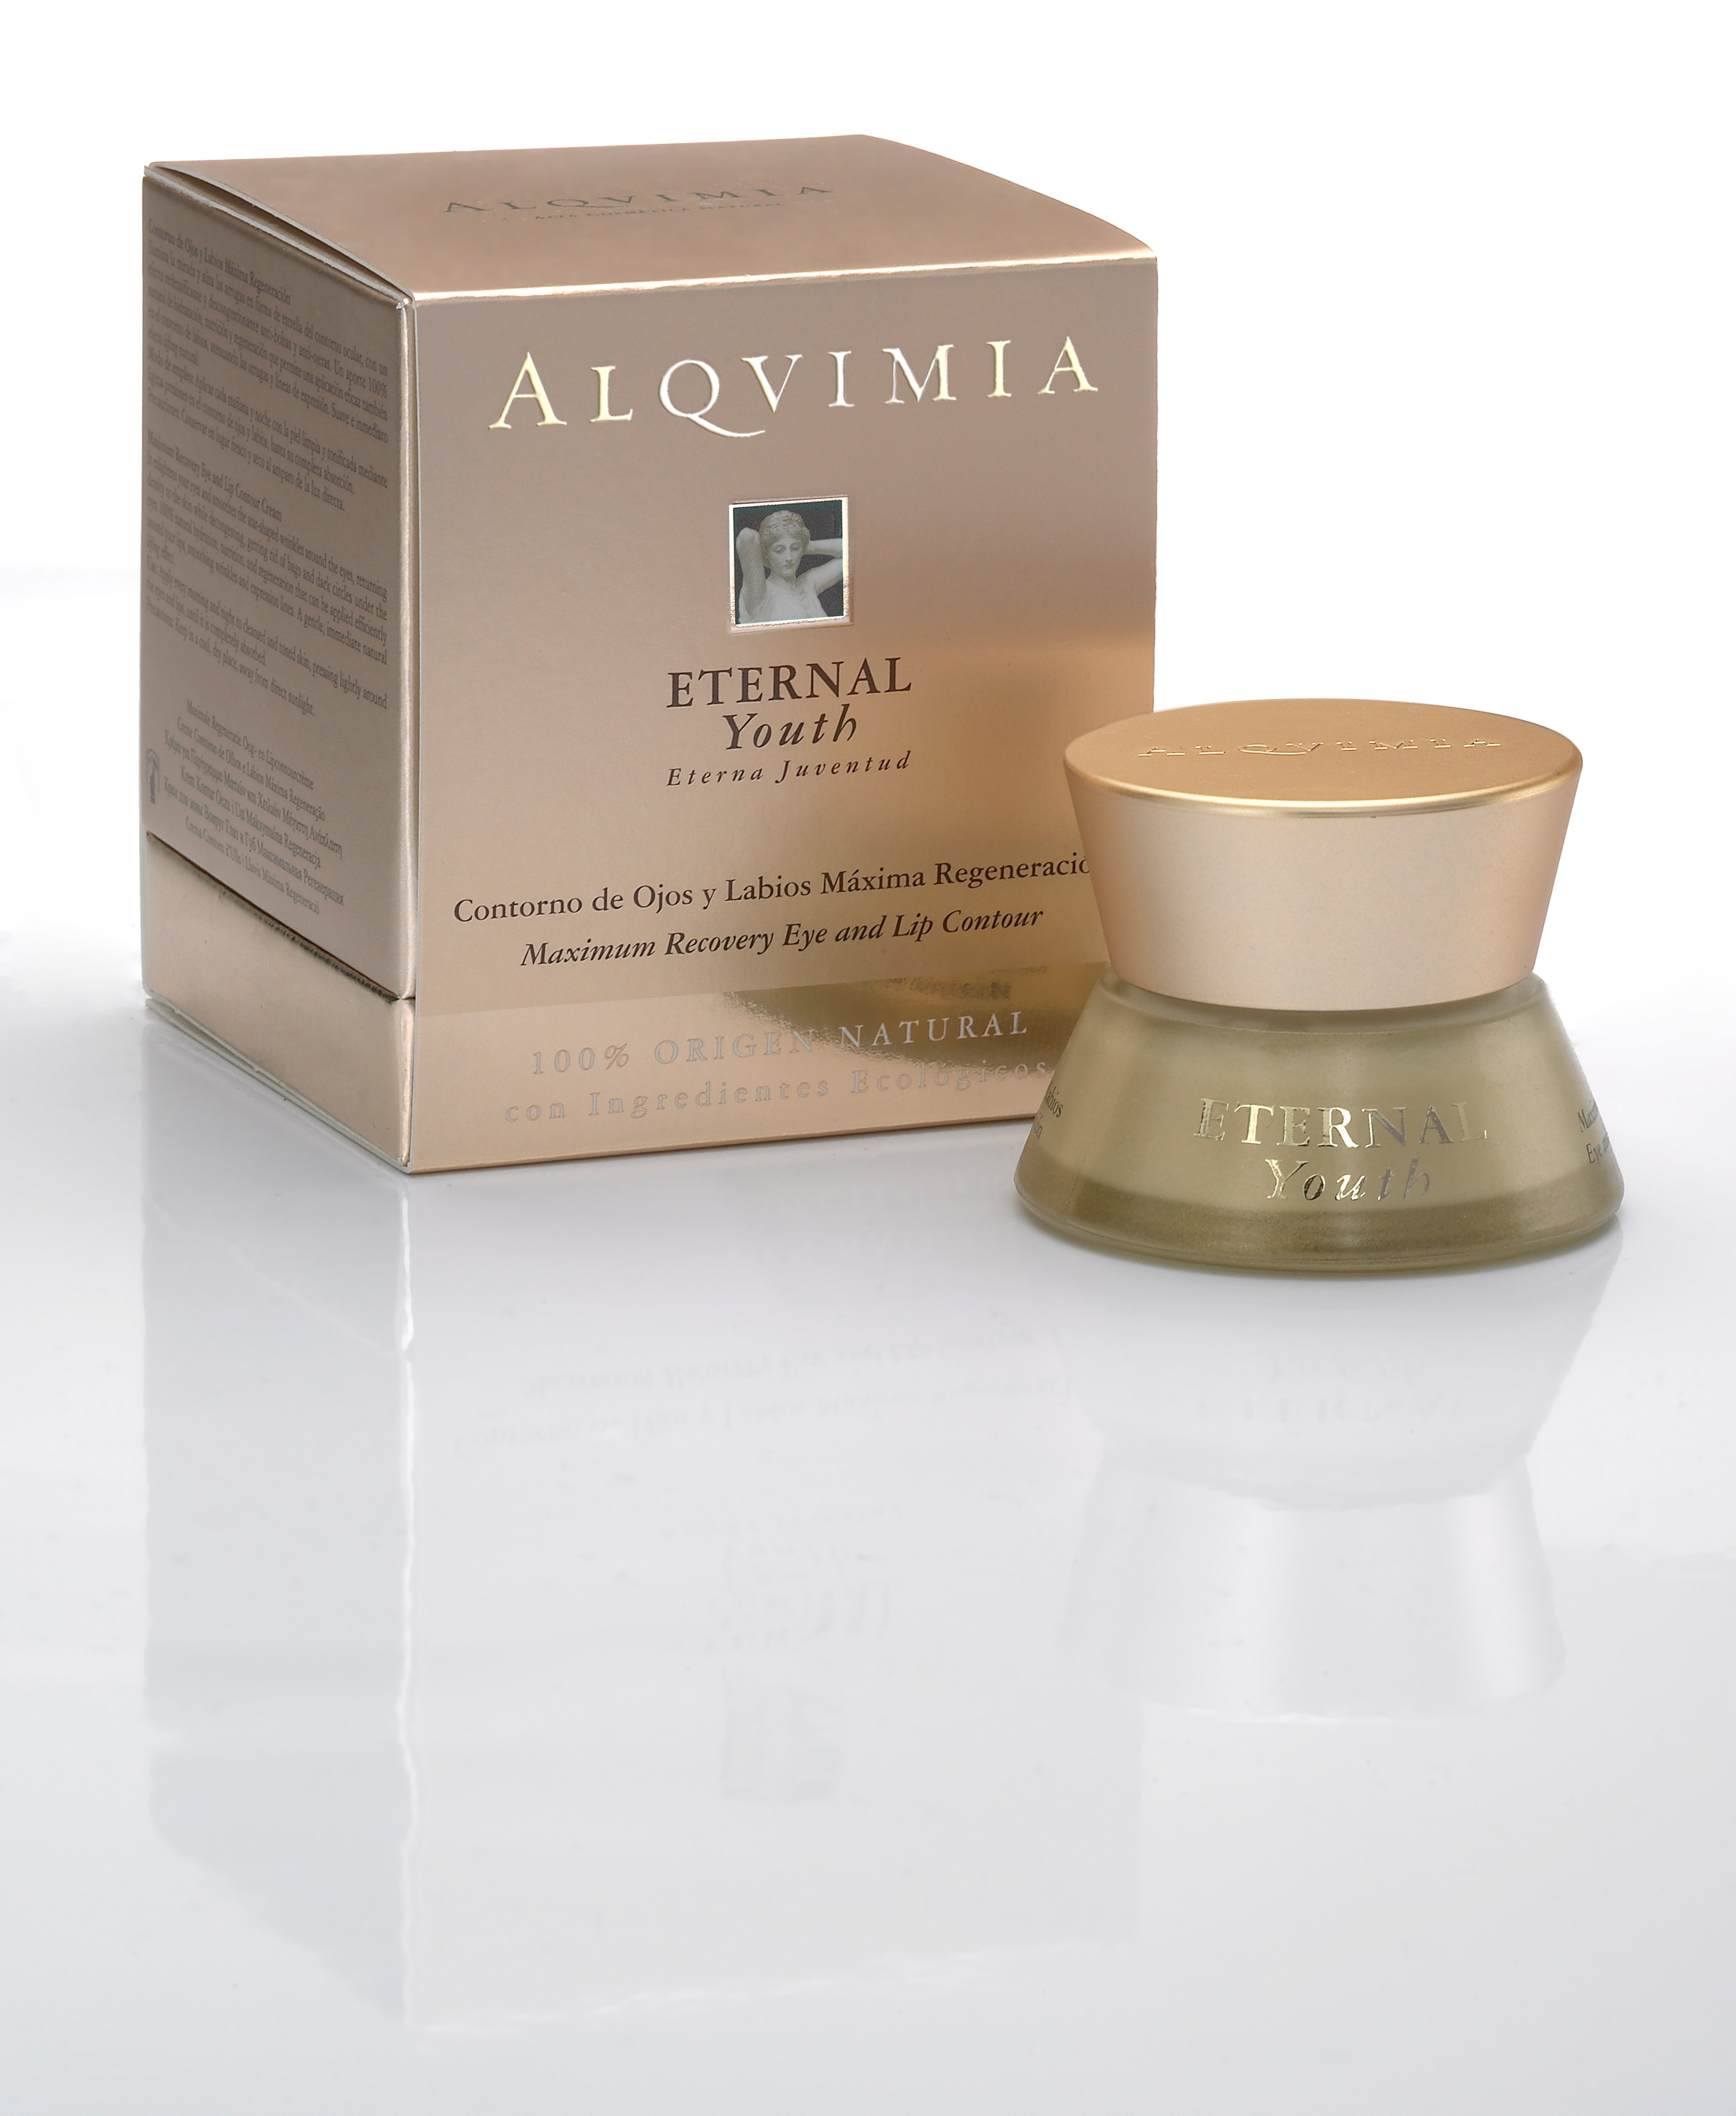 Alqvimia Eternal youth eye and lip contour cream 15 ml